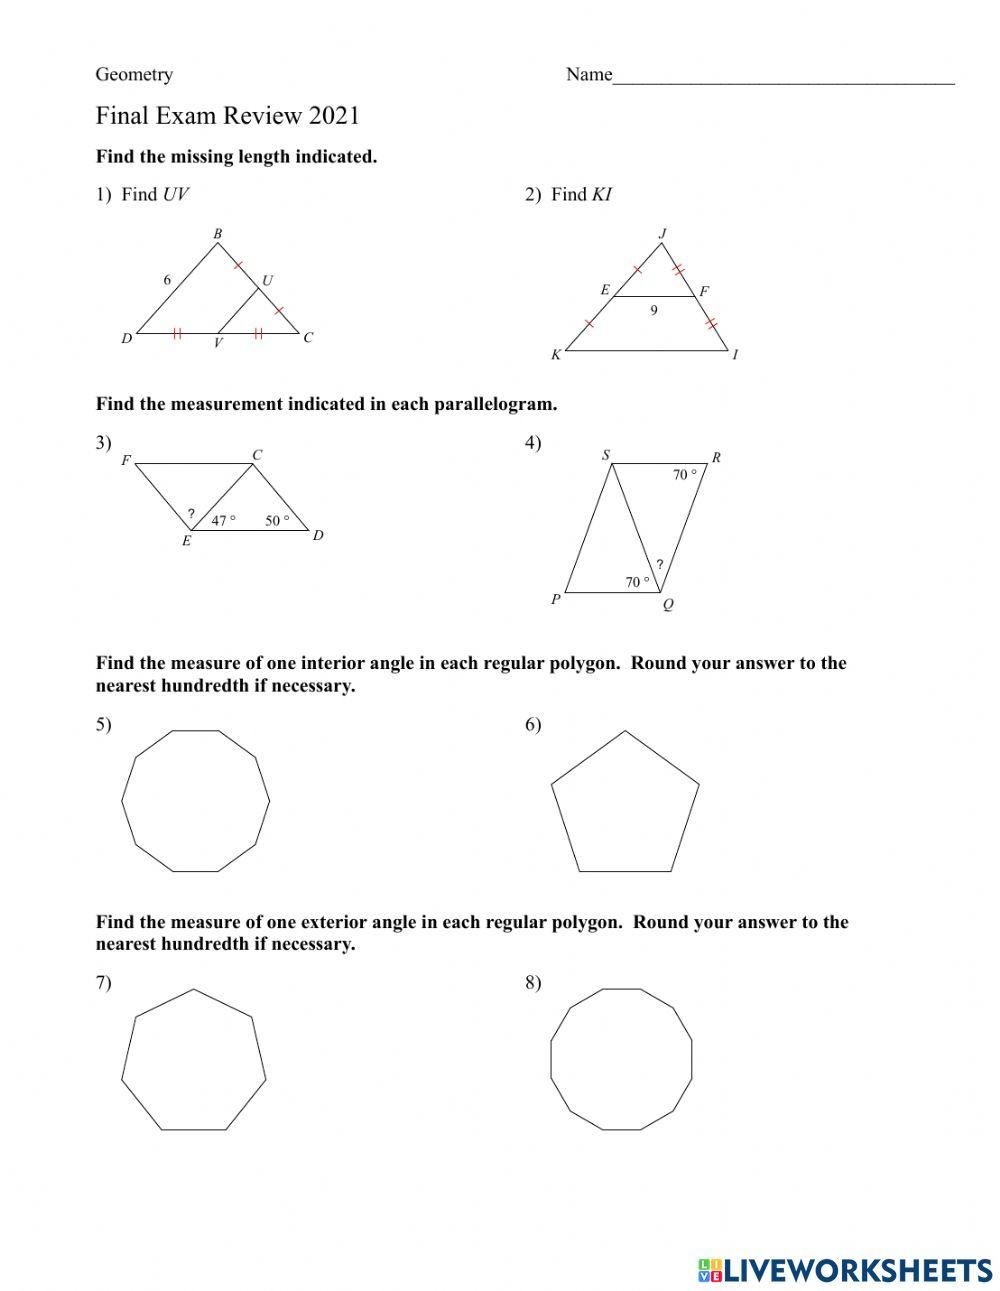 Geometry Sem 2 Final Review